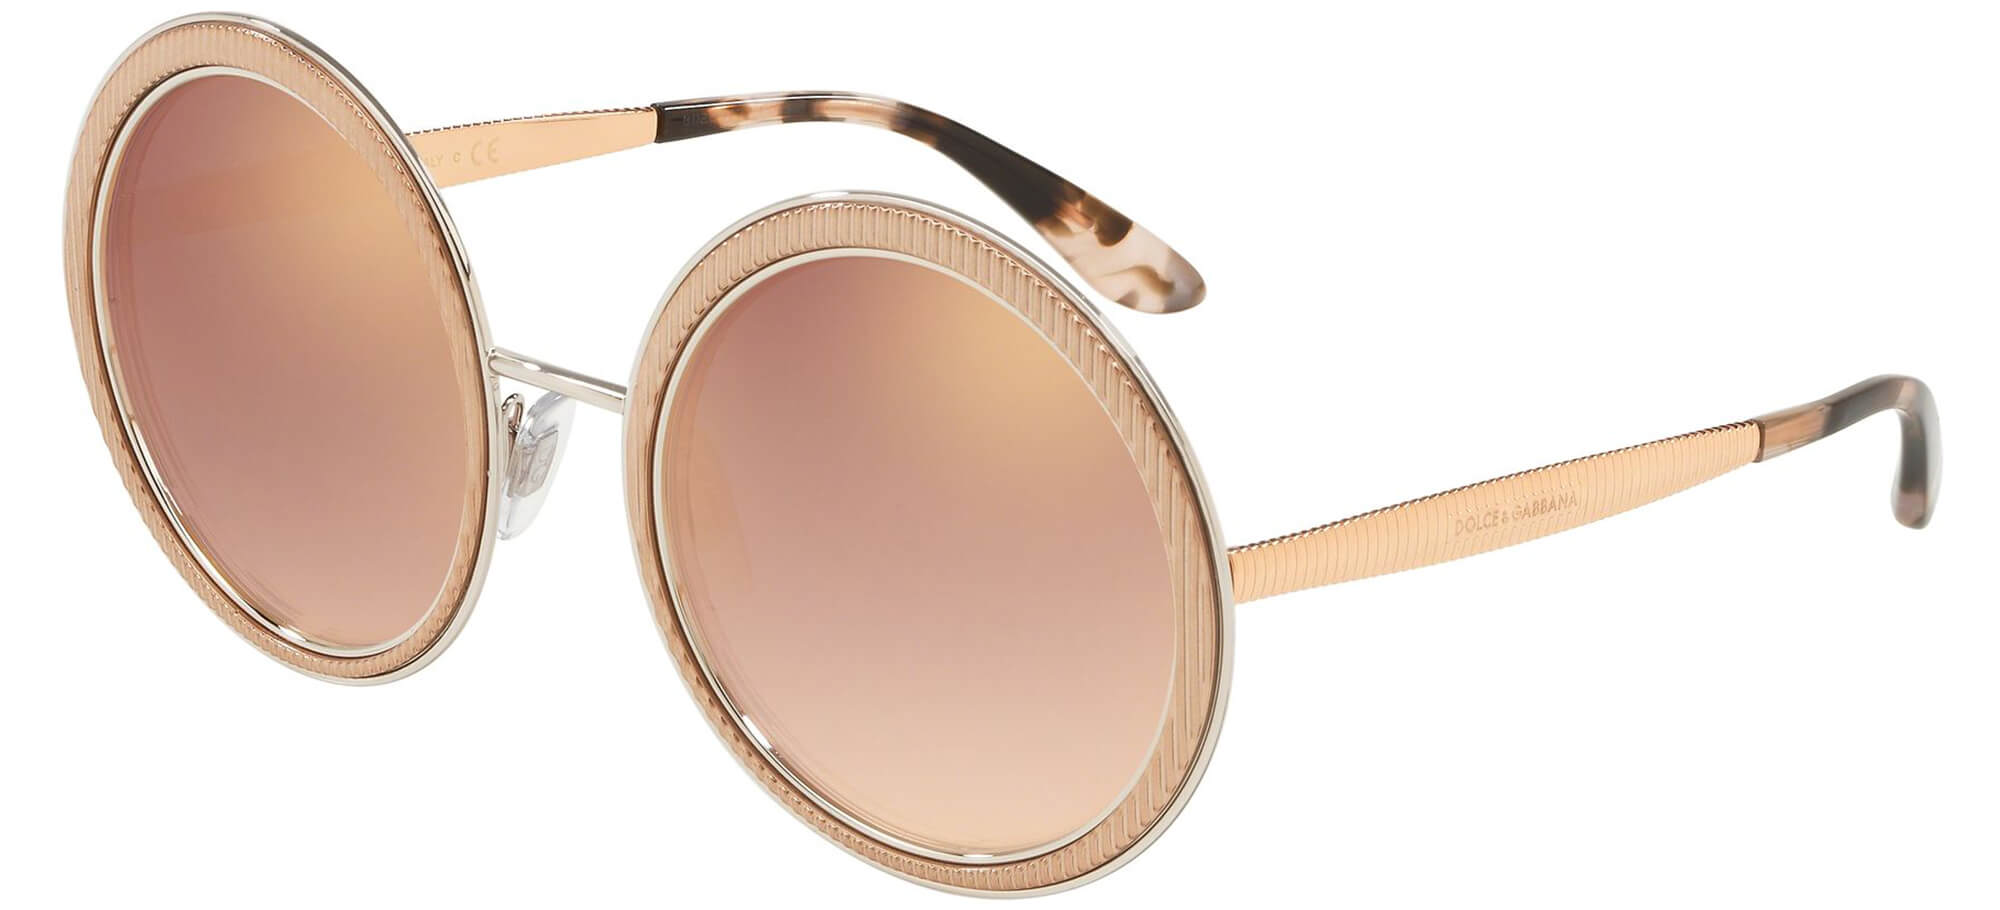 Dolce & GabbanaGROS GRAIN DG 2179Rose Gold/pink Shaded (1298/6F)